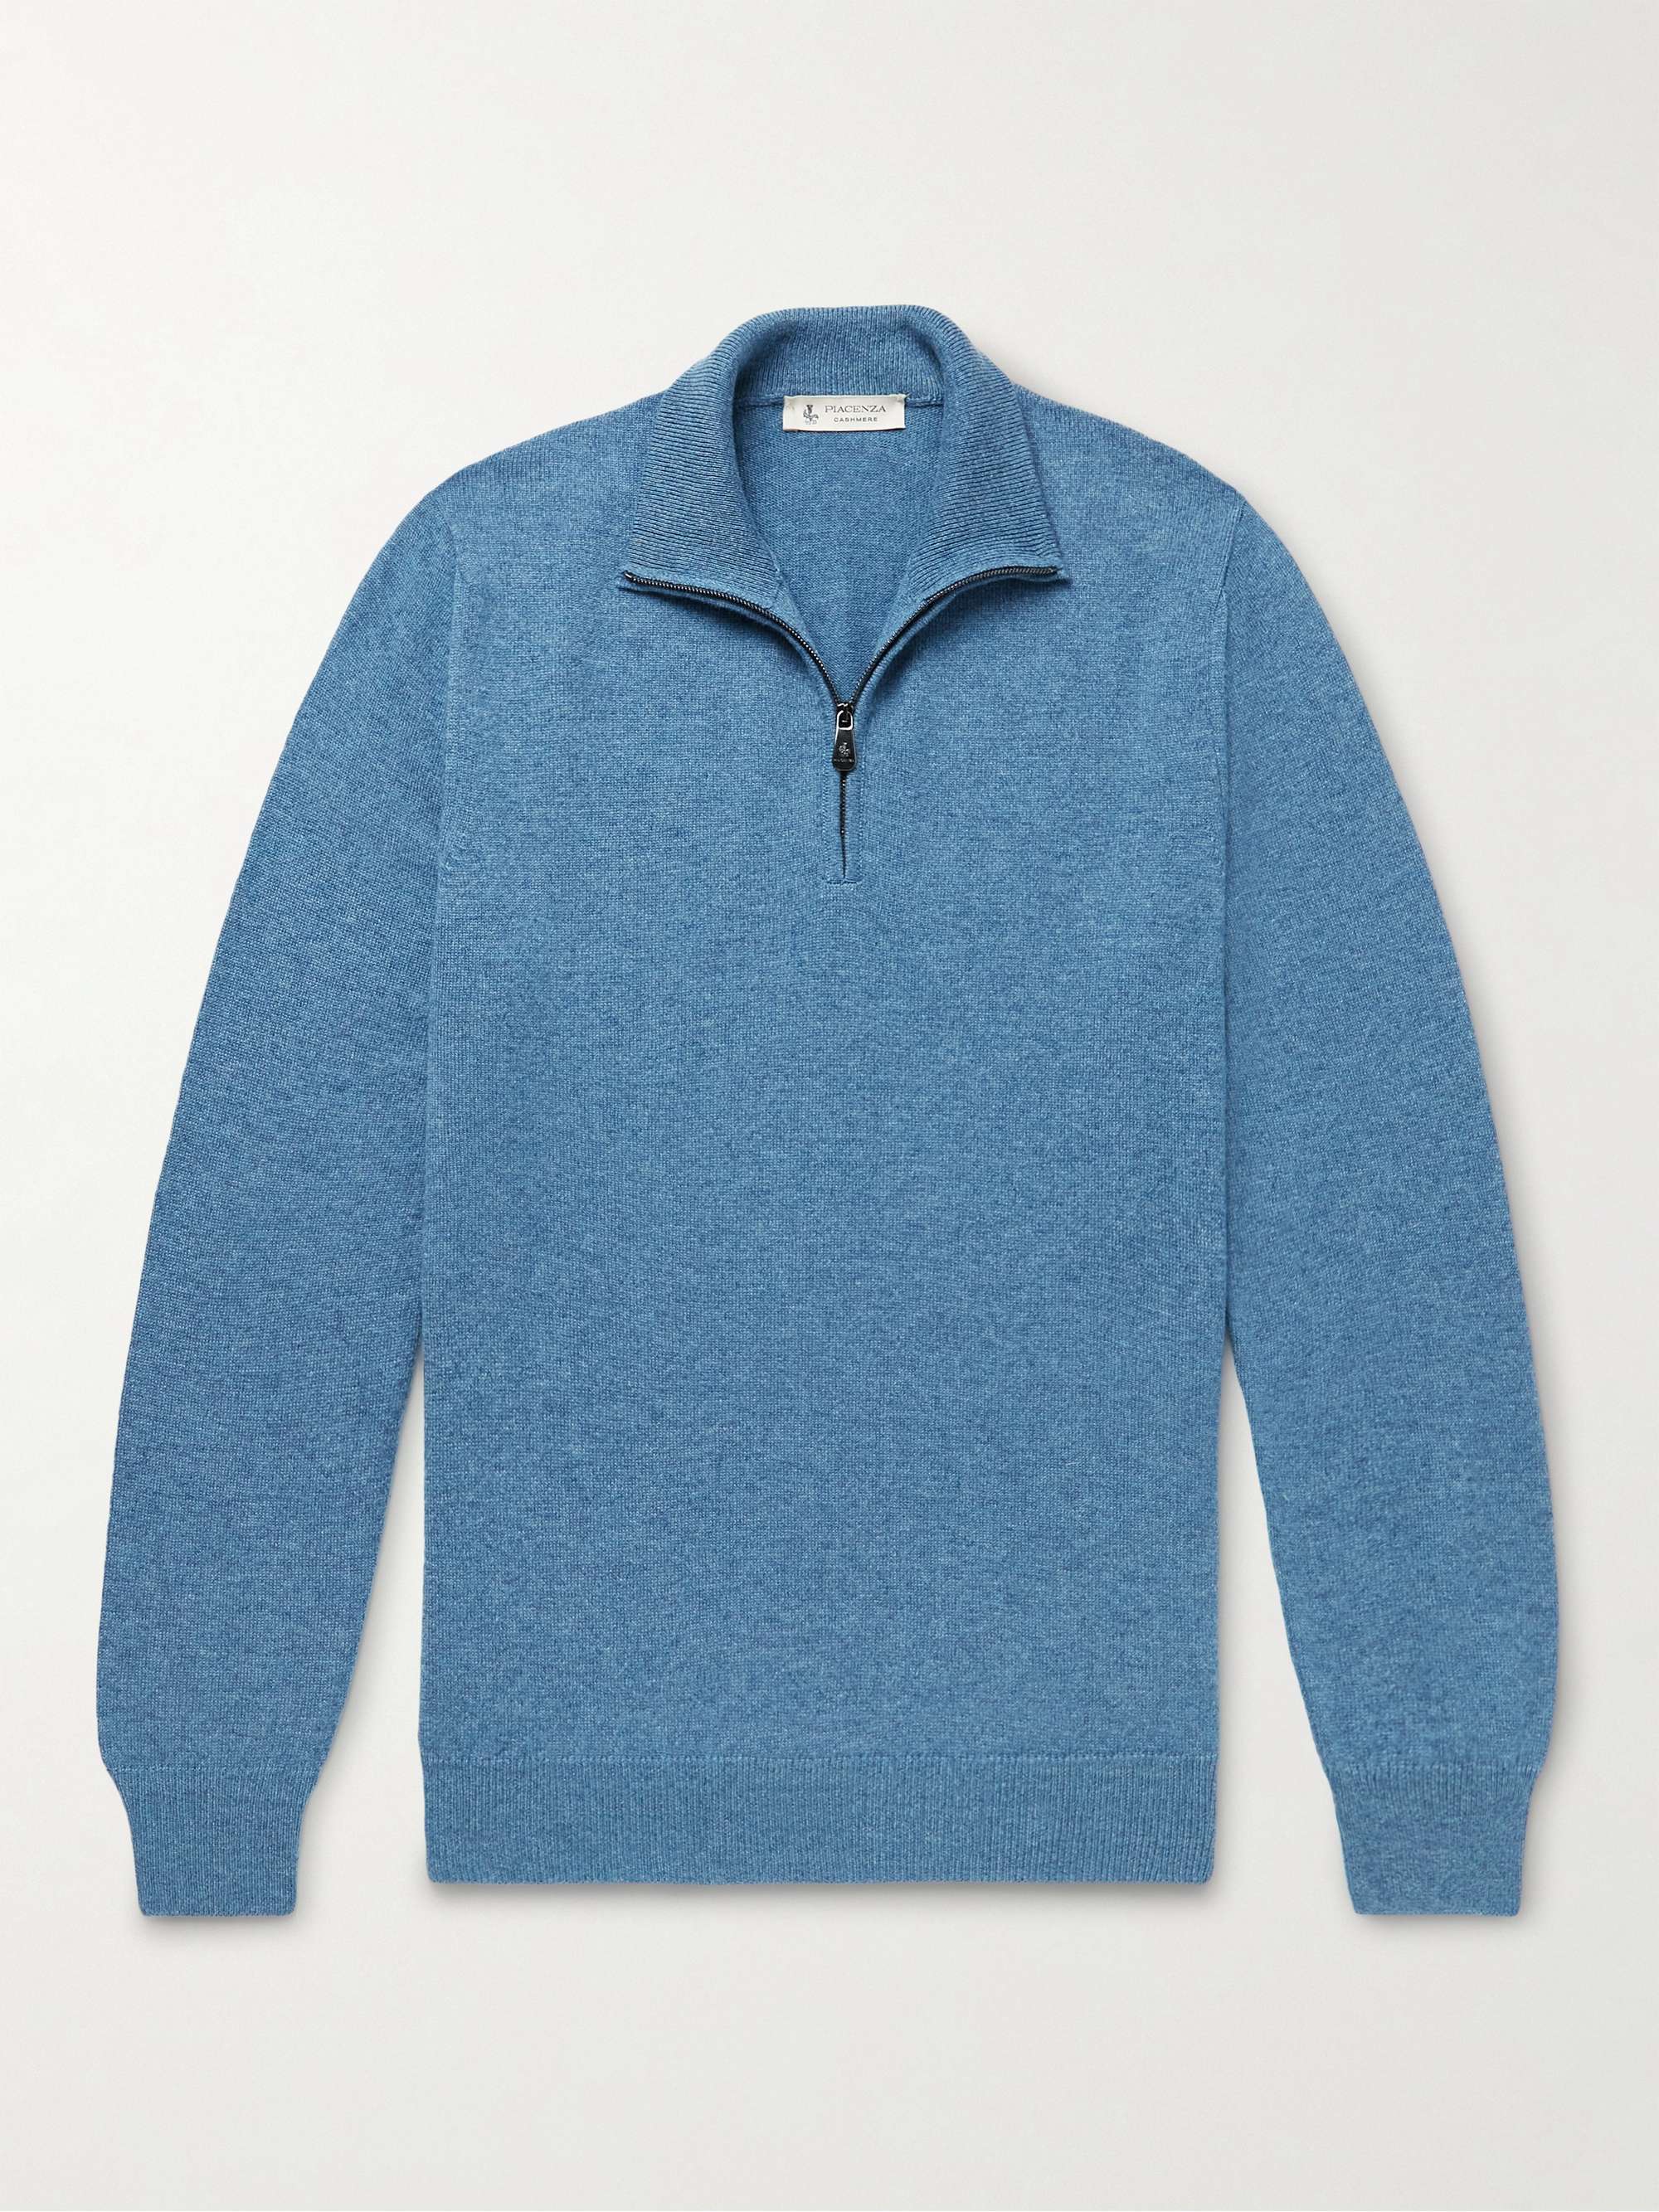 Blue Slim-Fit Cashmere Half-Zip Sweater | PIACENZA CASHMERE | MR PORTER